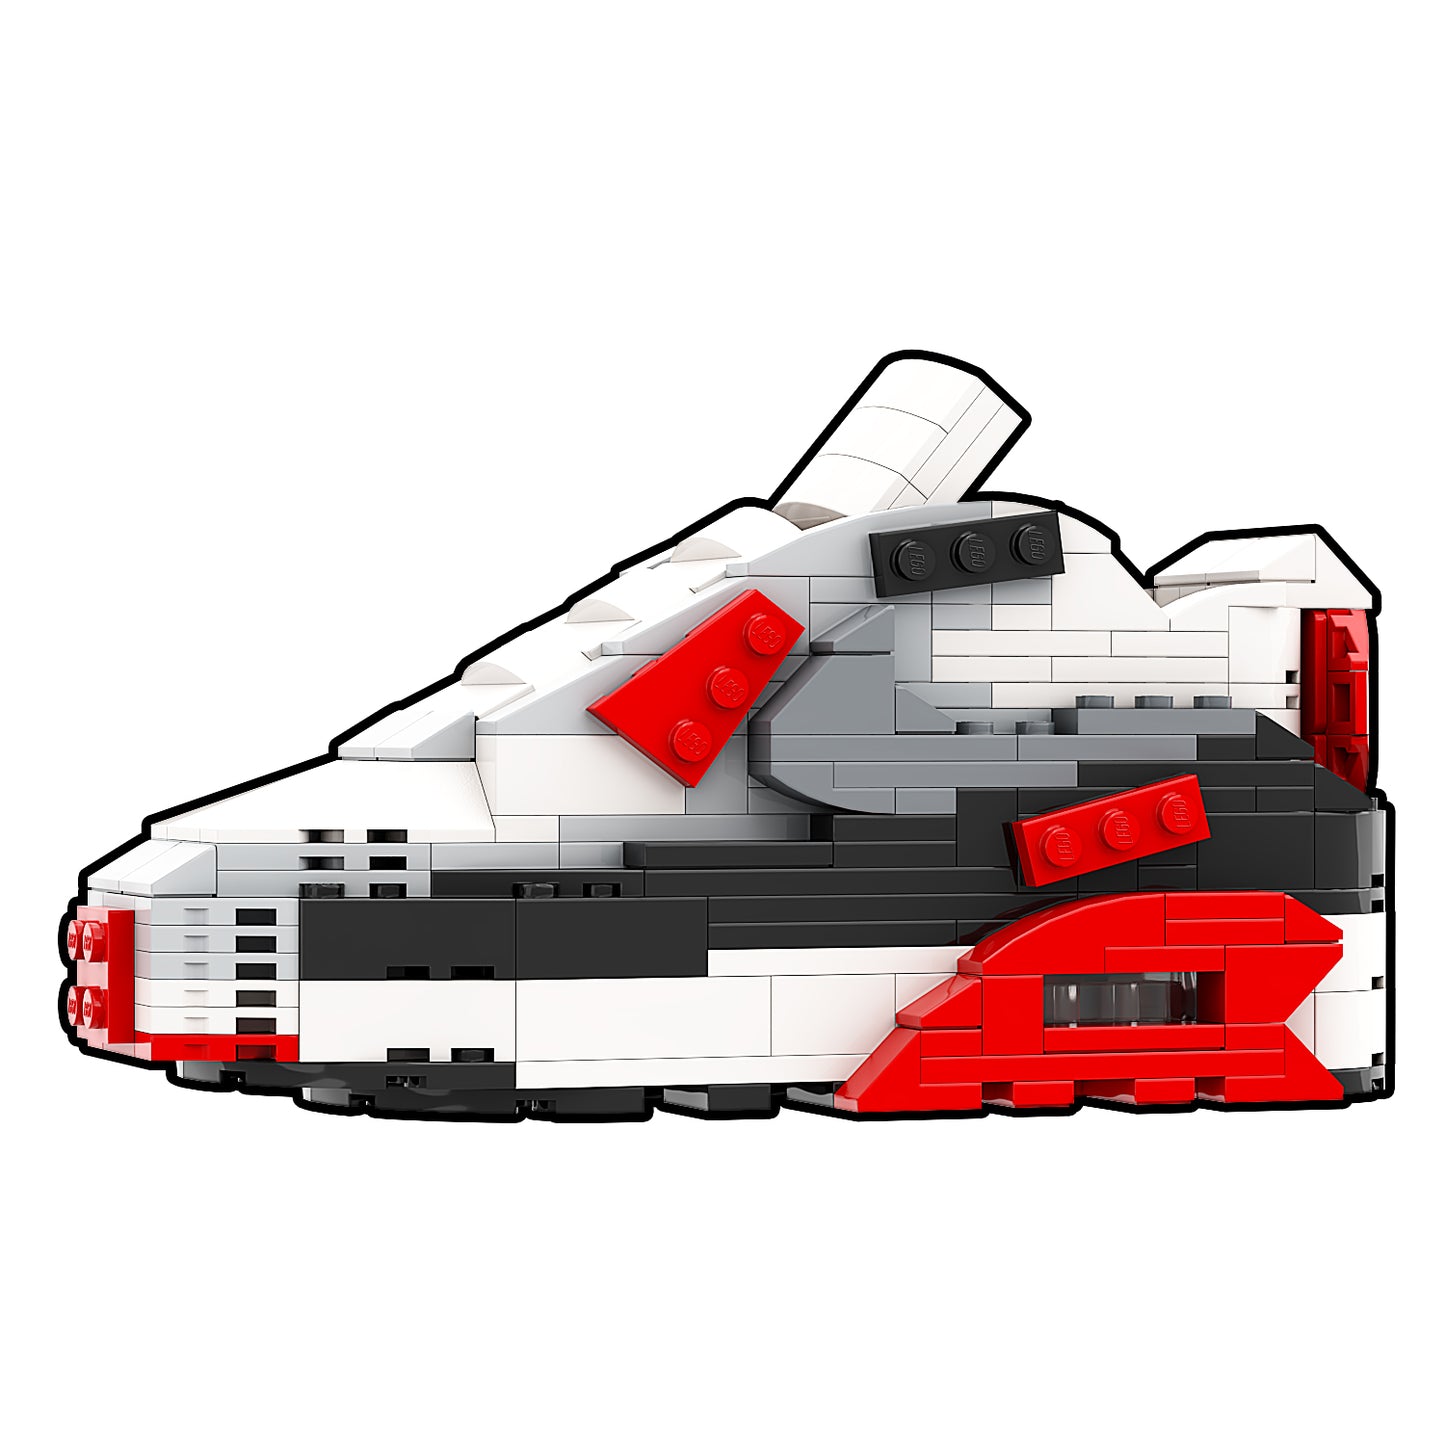 REGULAR "Air Max 90 Infrared" Sneaker Bricks with Mini Figure